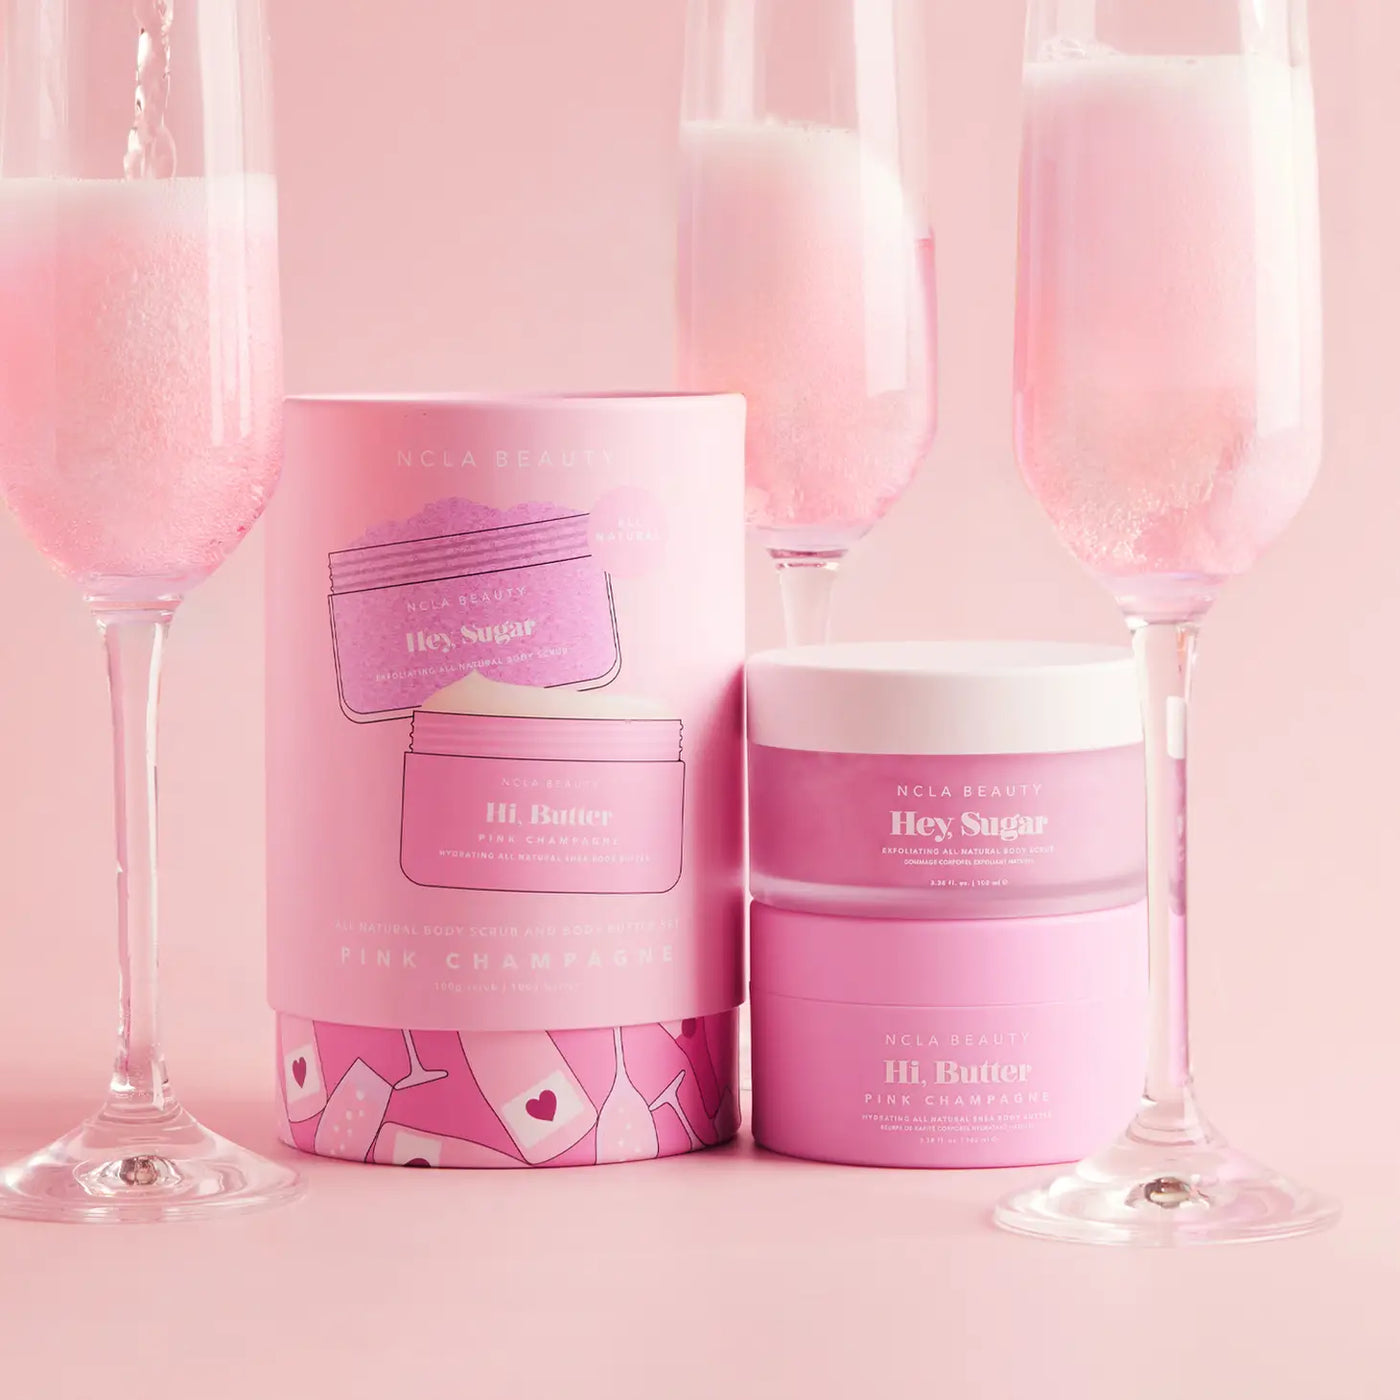 Pink Champagne Body Scrub + Body Butter Set